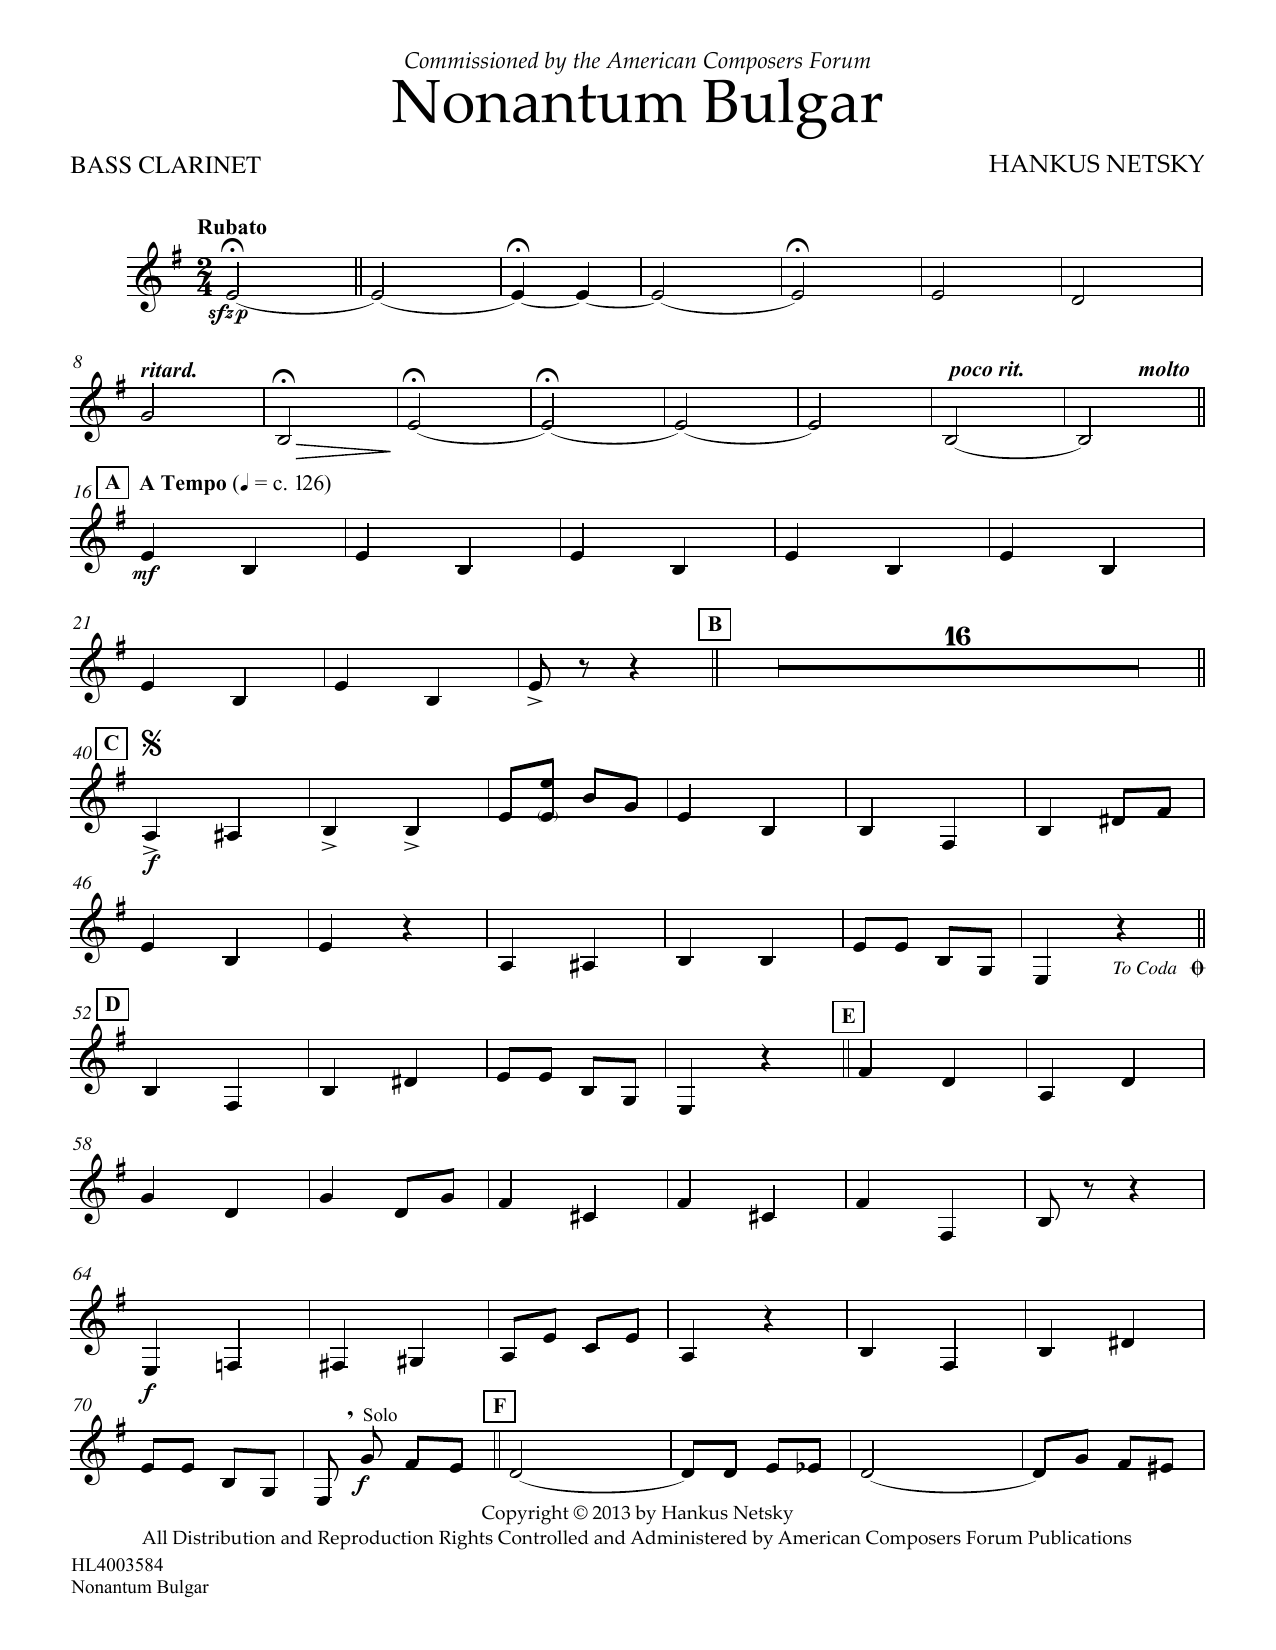 Hankus Netsky Nonantum Bulgar - Bb Bass Clarinet Sheet Music Notes & Chords for Concert Band - Download or Print PDF